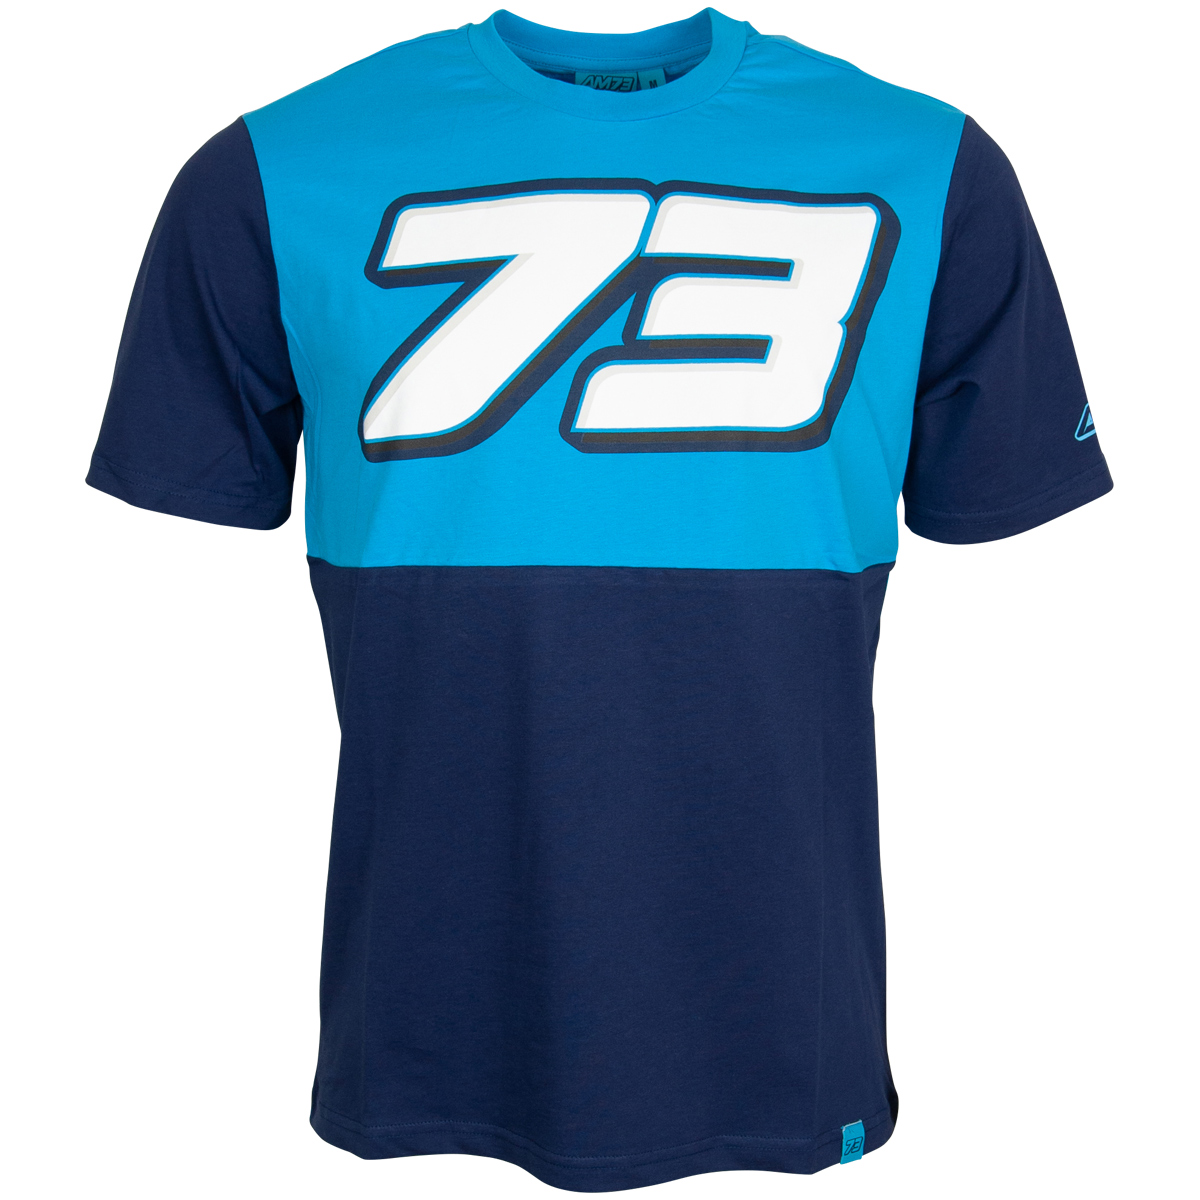 Alex Marquez T-Shirt "73" - blau